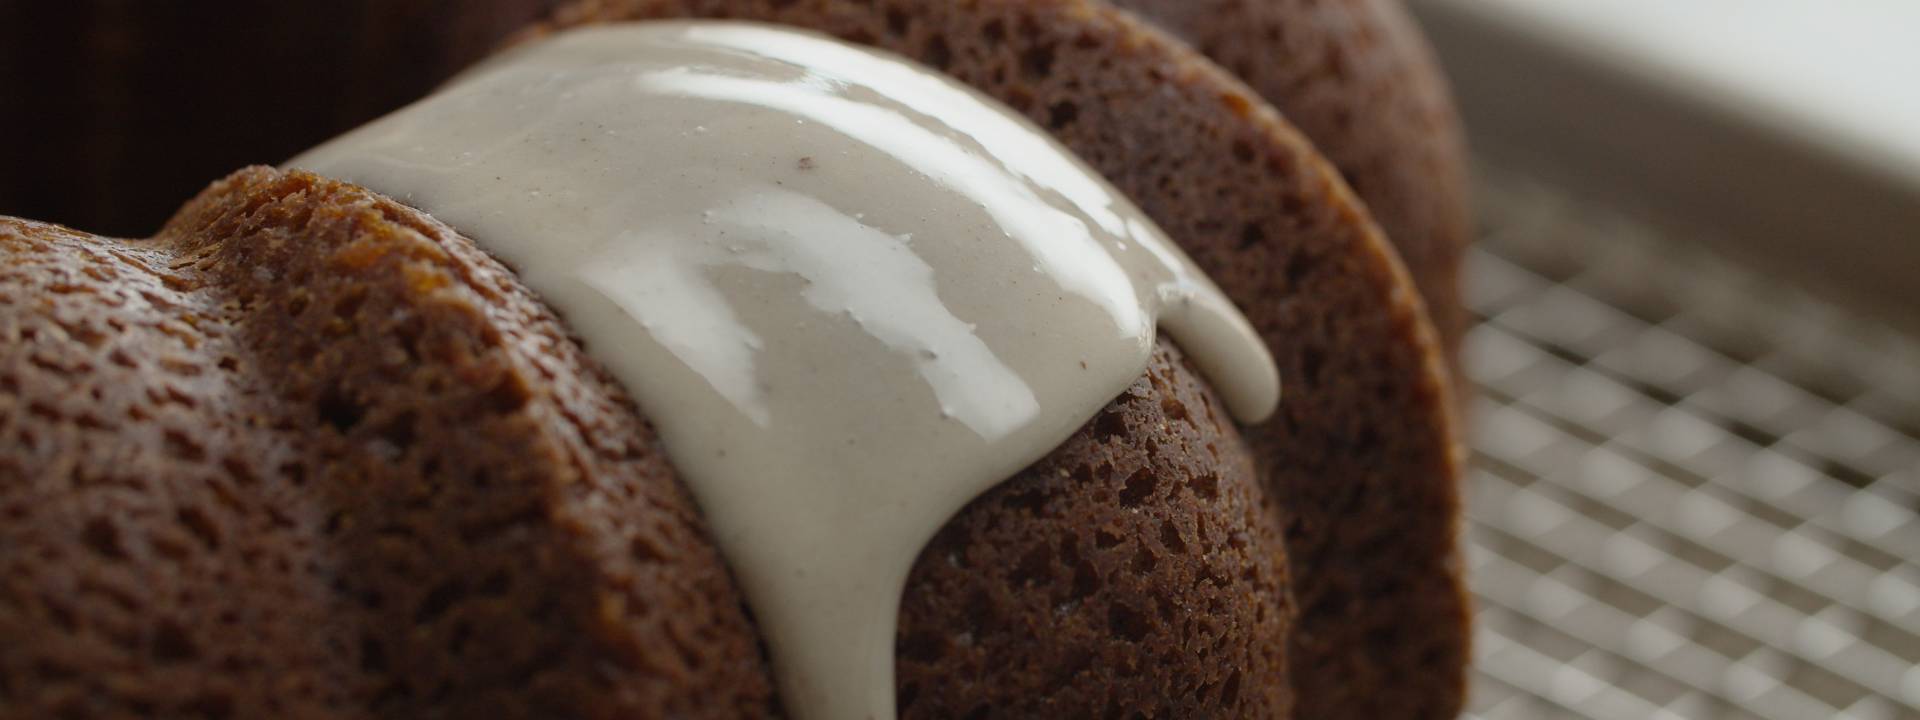 Gingerbread Bundt Cake with Spiced Glaze » Gordon Ramsay.com